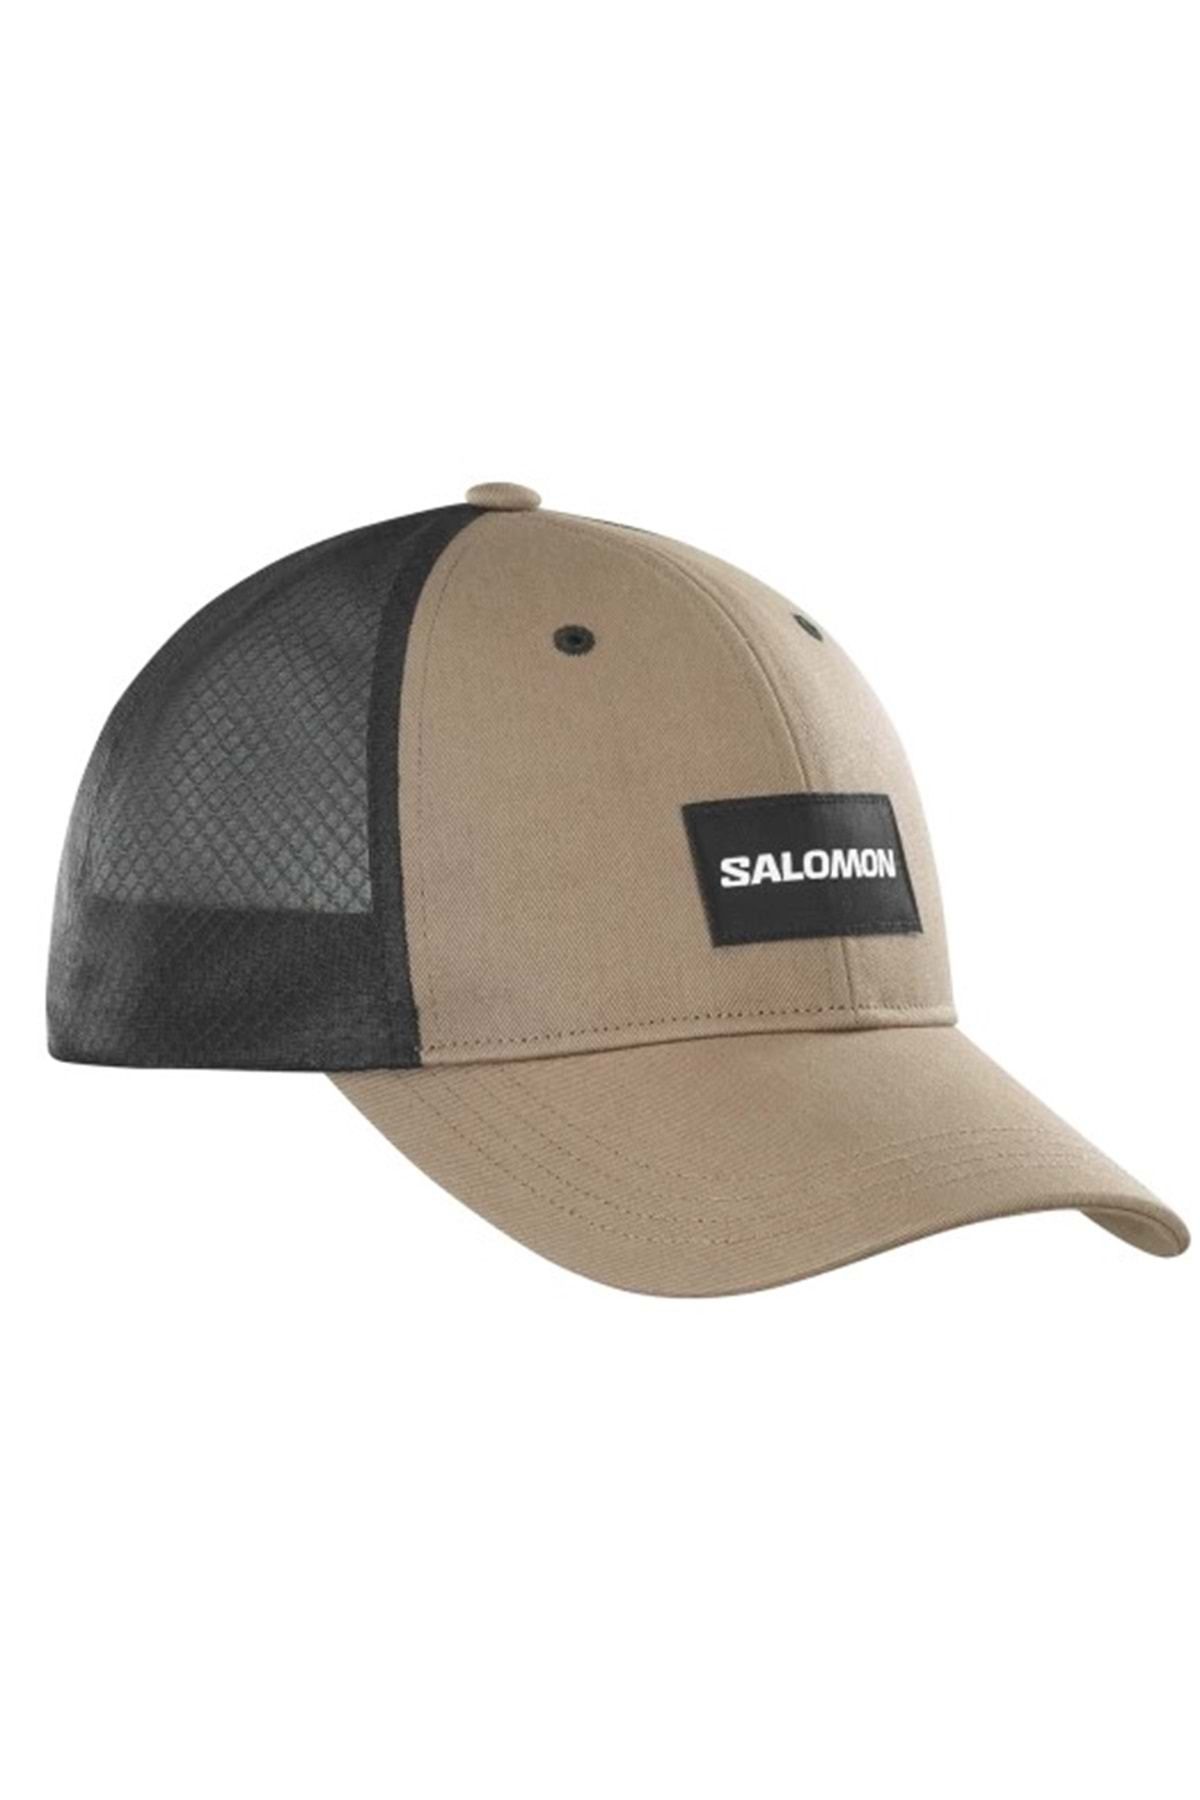 Salomon کلاه خمیده کامیون unisex خاکی